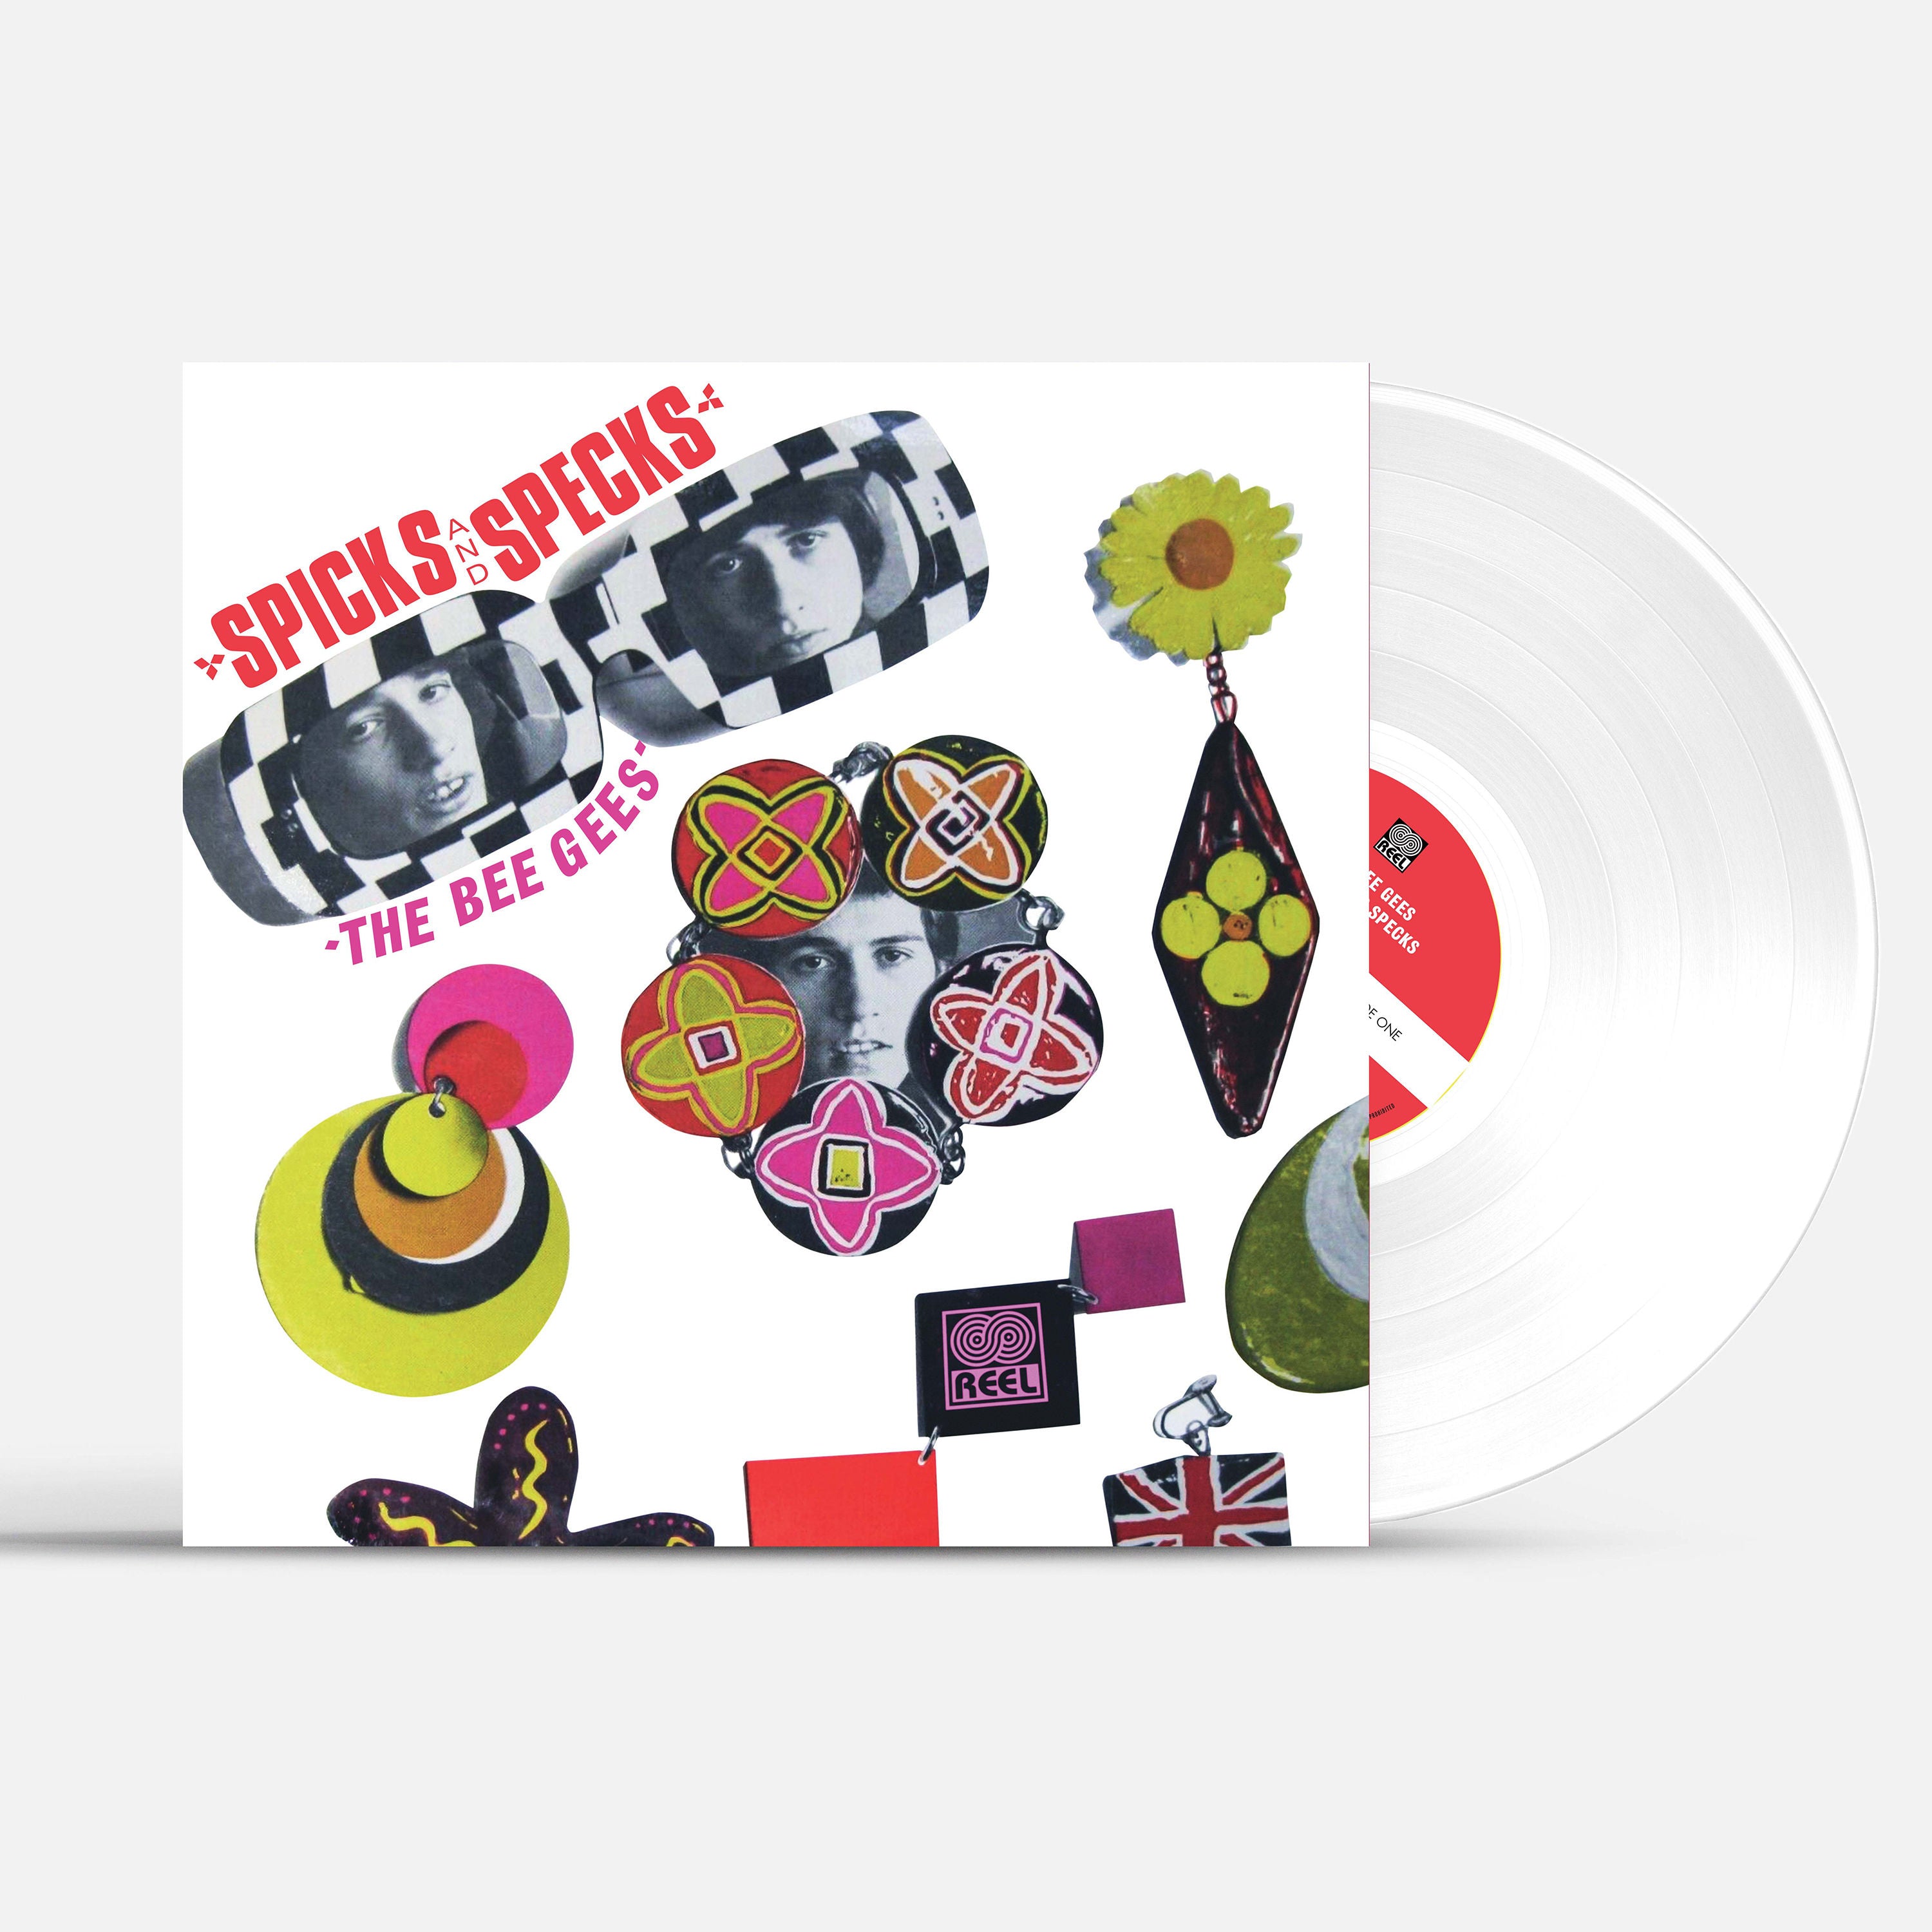 Spicks & Specks: Limited Edition White Vinyl LP